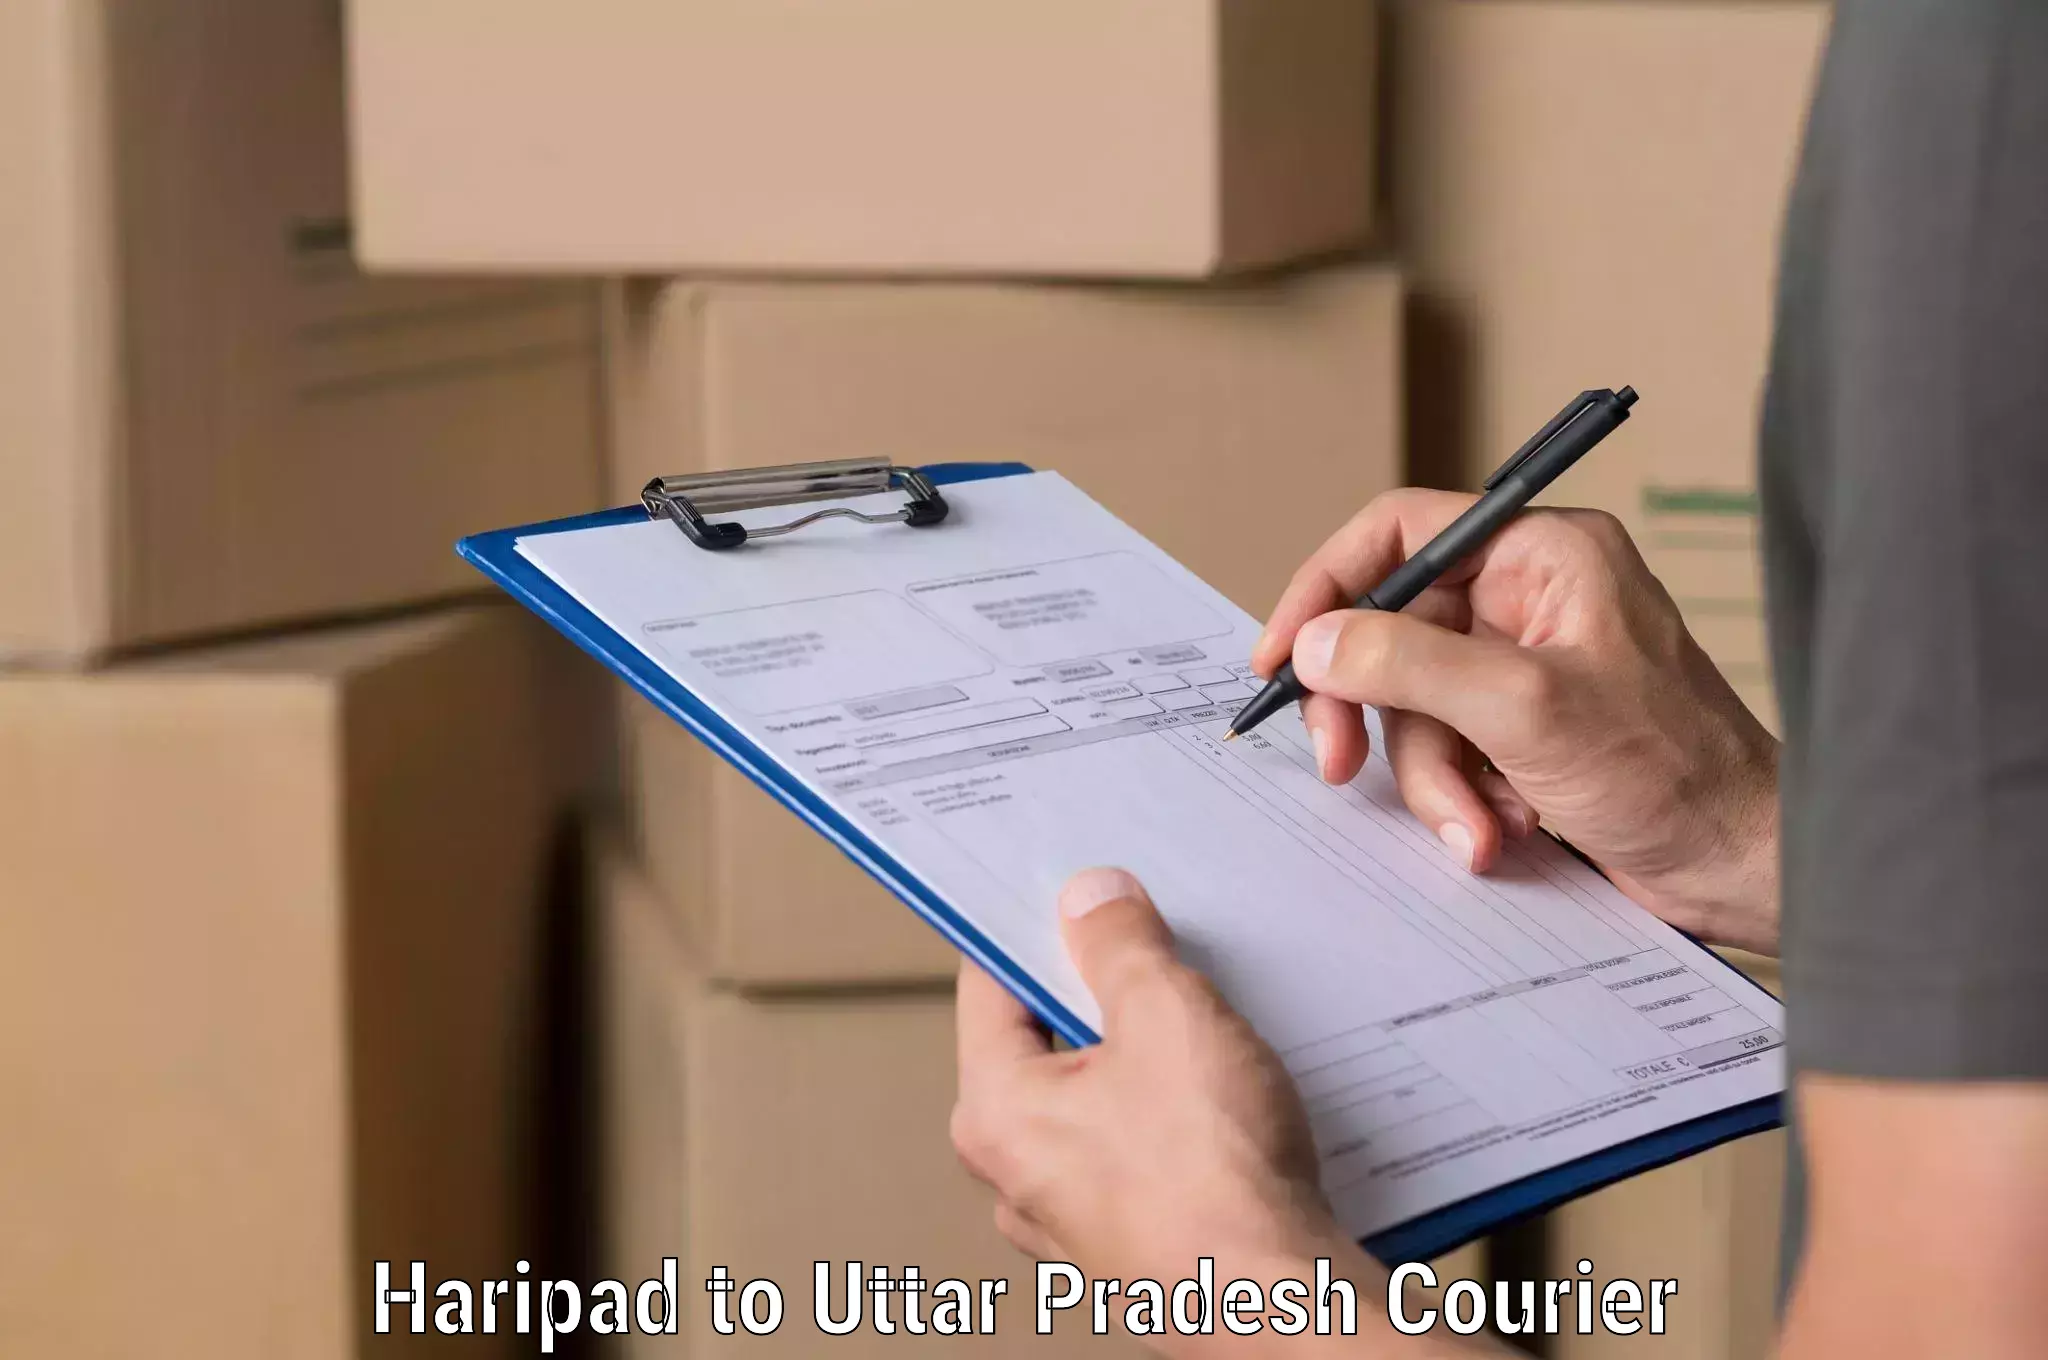 Subscription-based courier Haripad to Noida